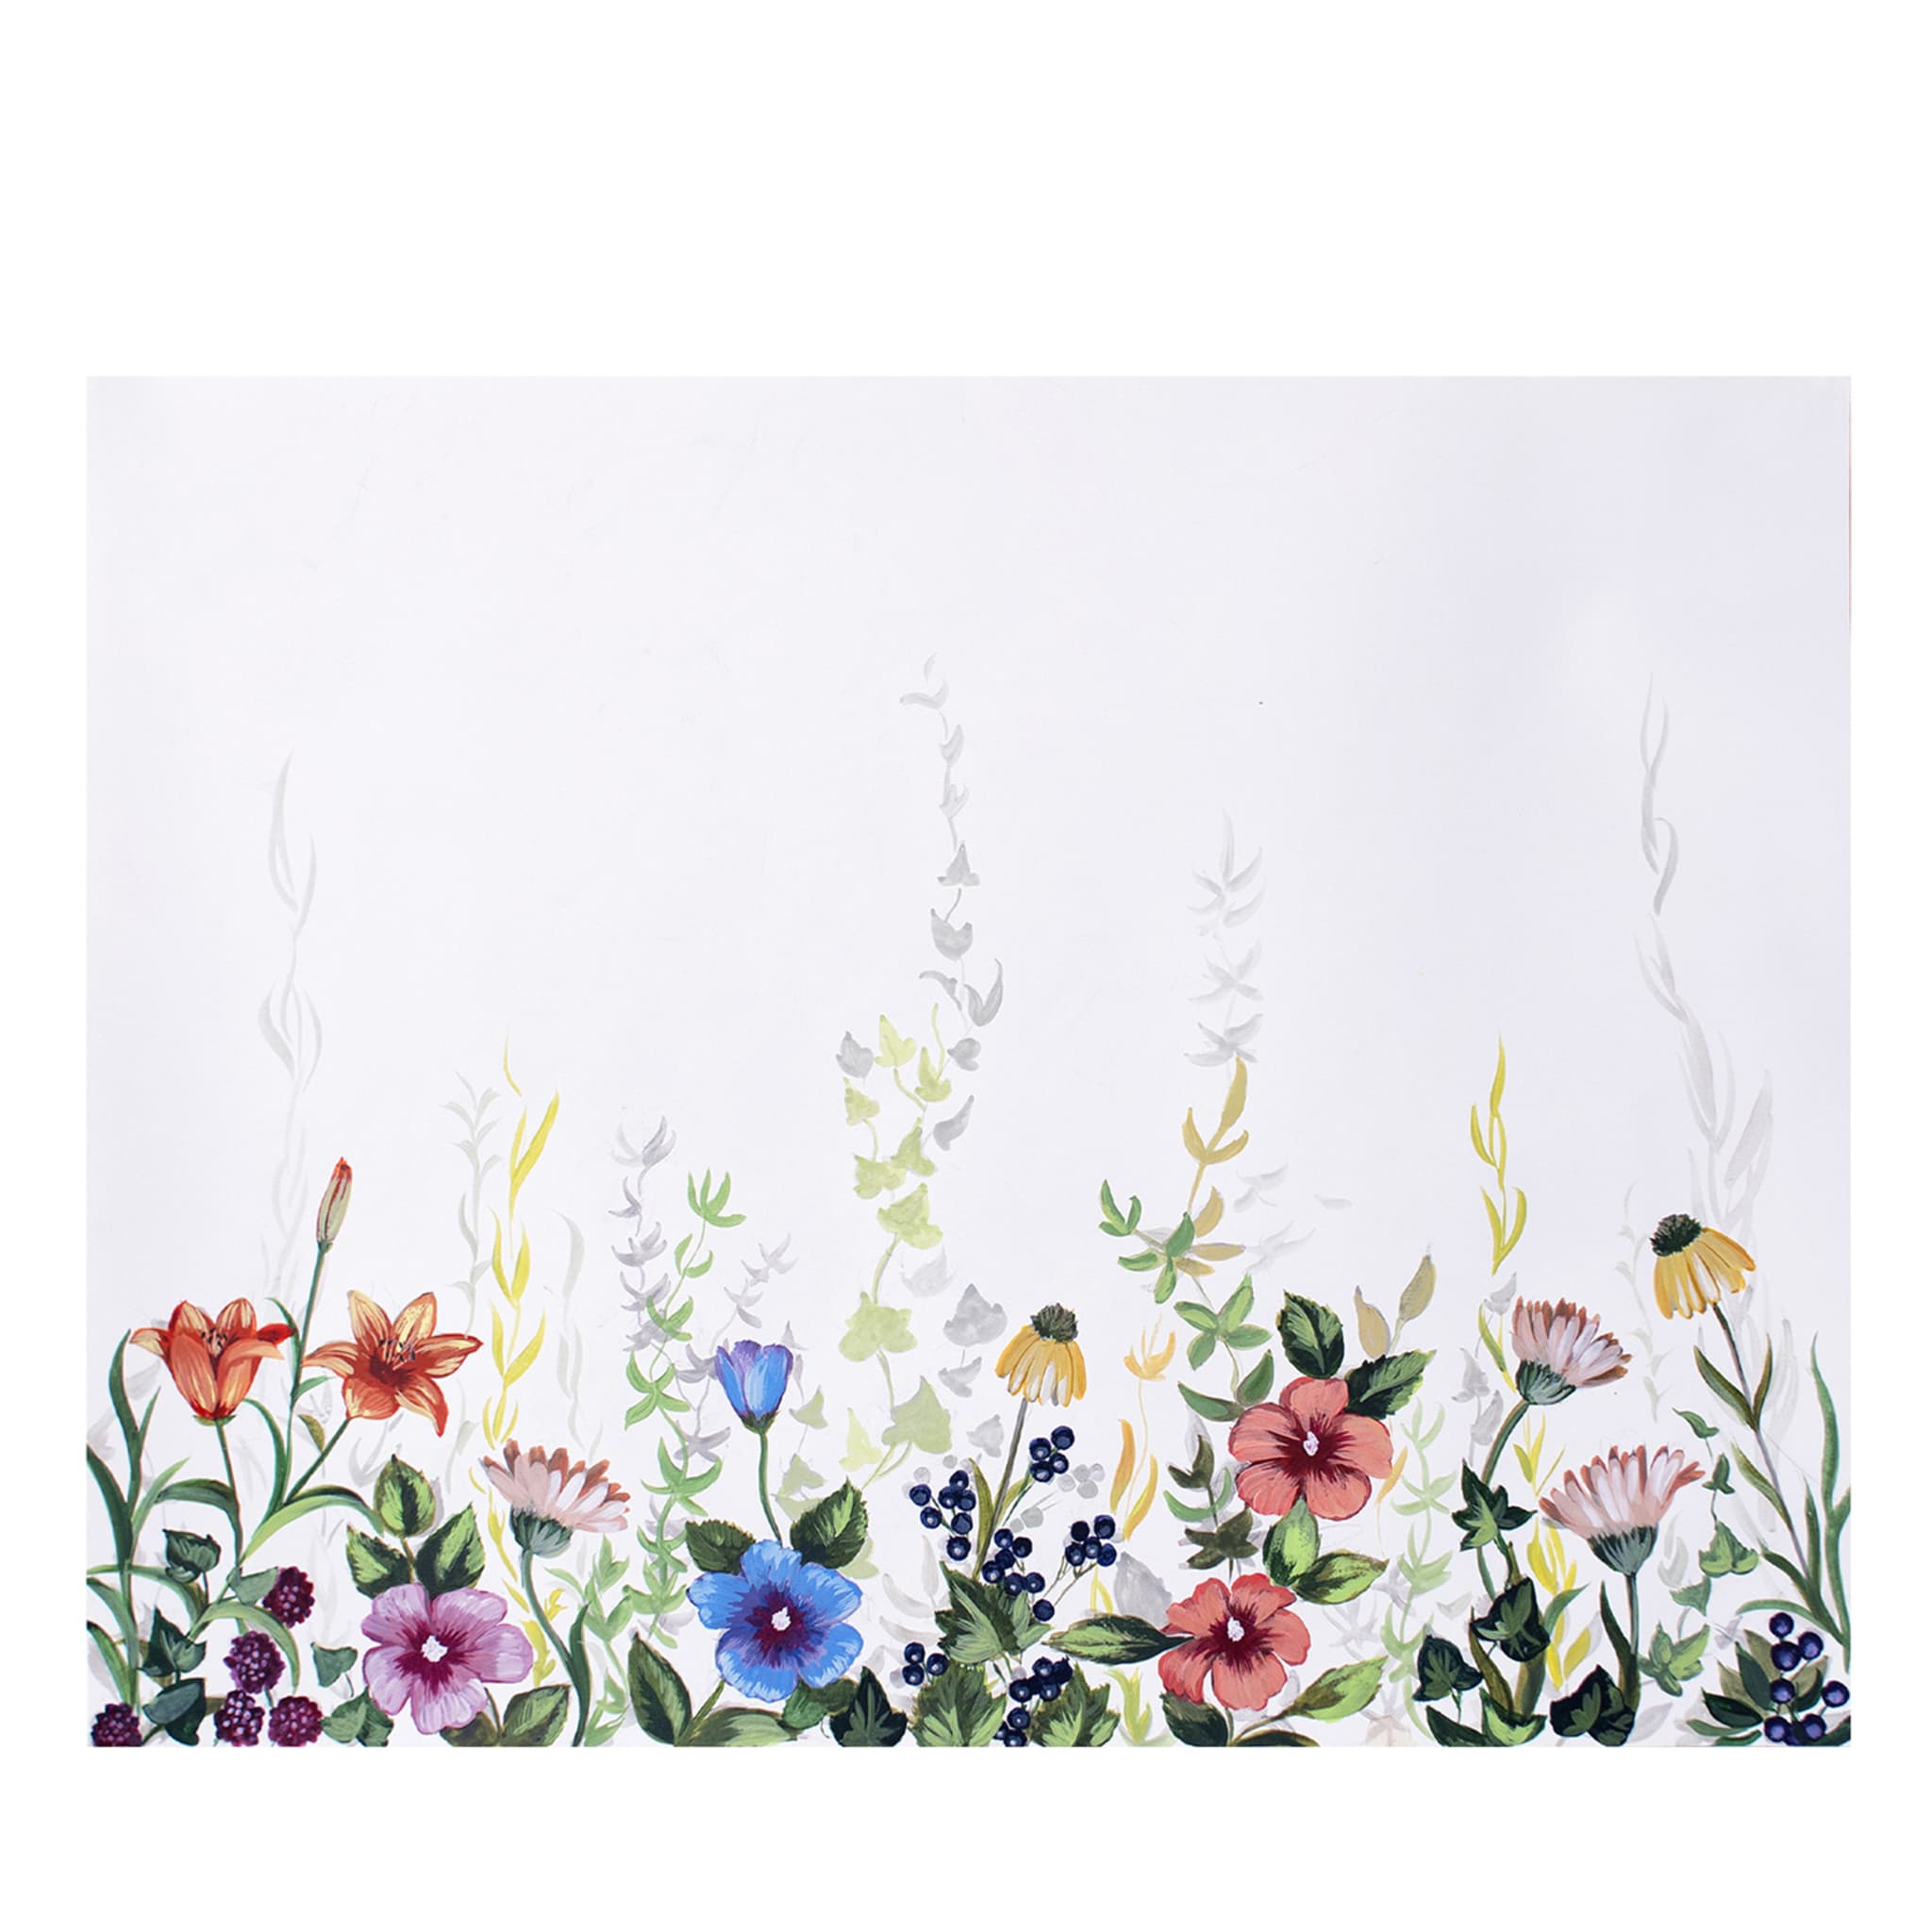 Flowers Wallpaper #2 - Main view